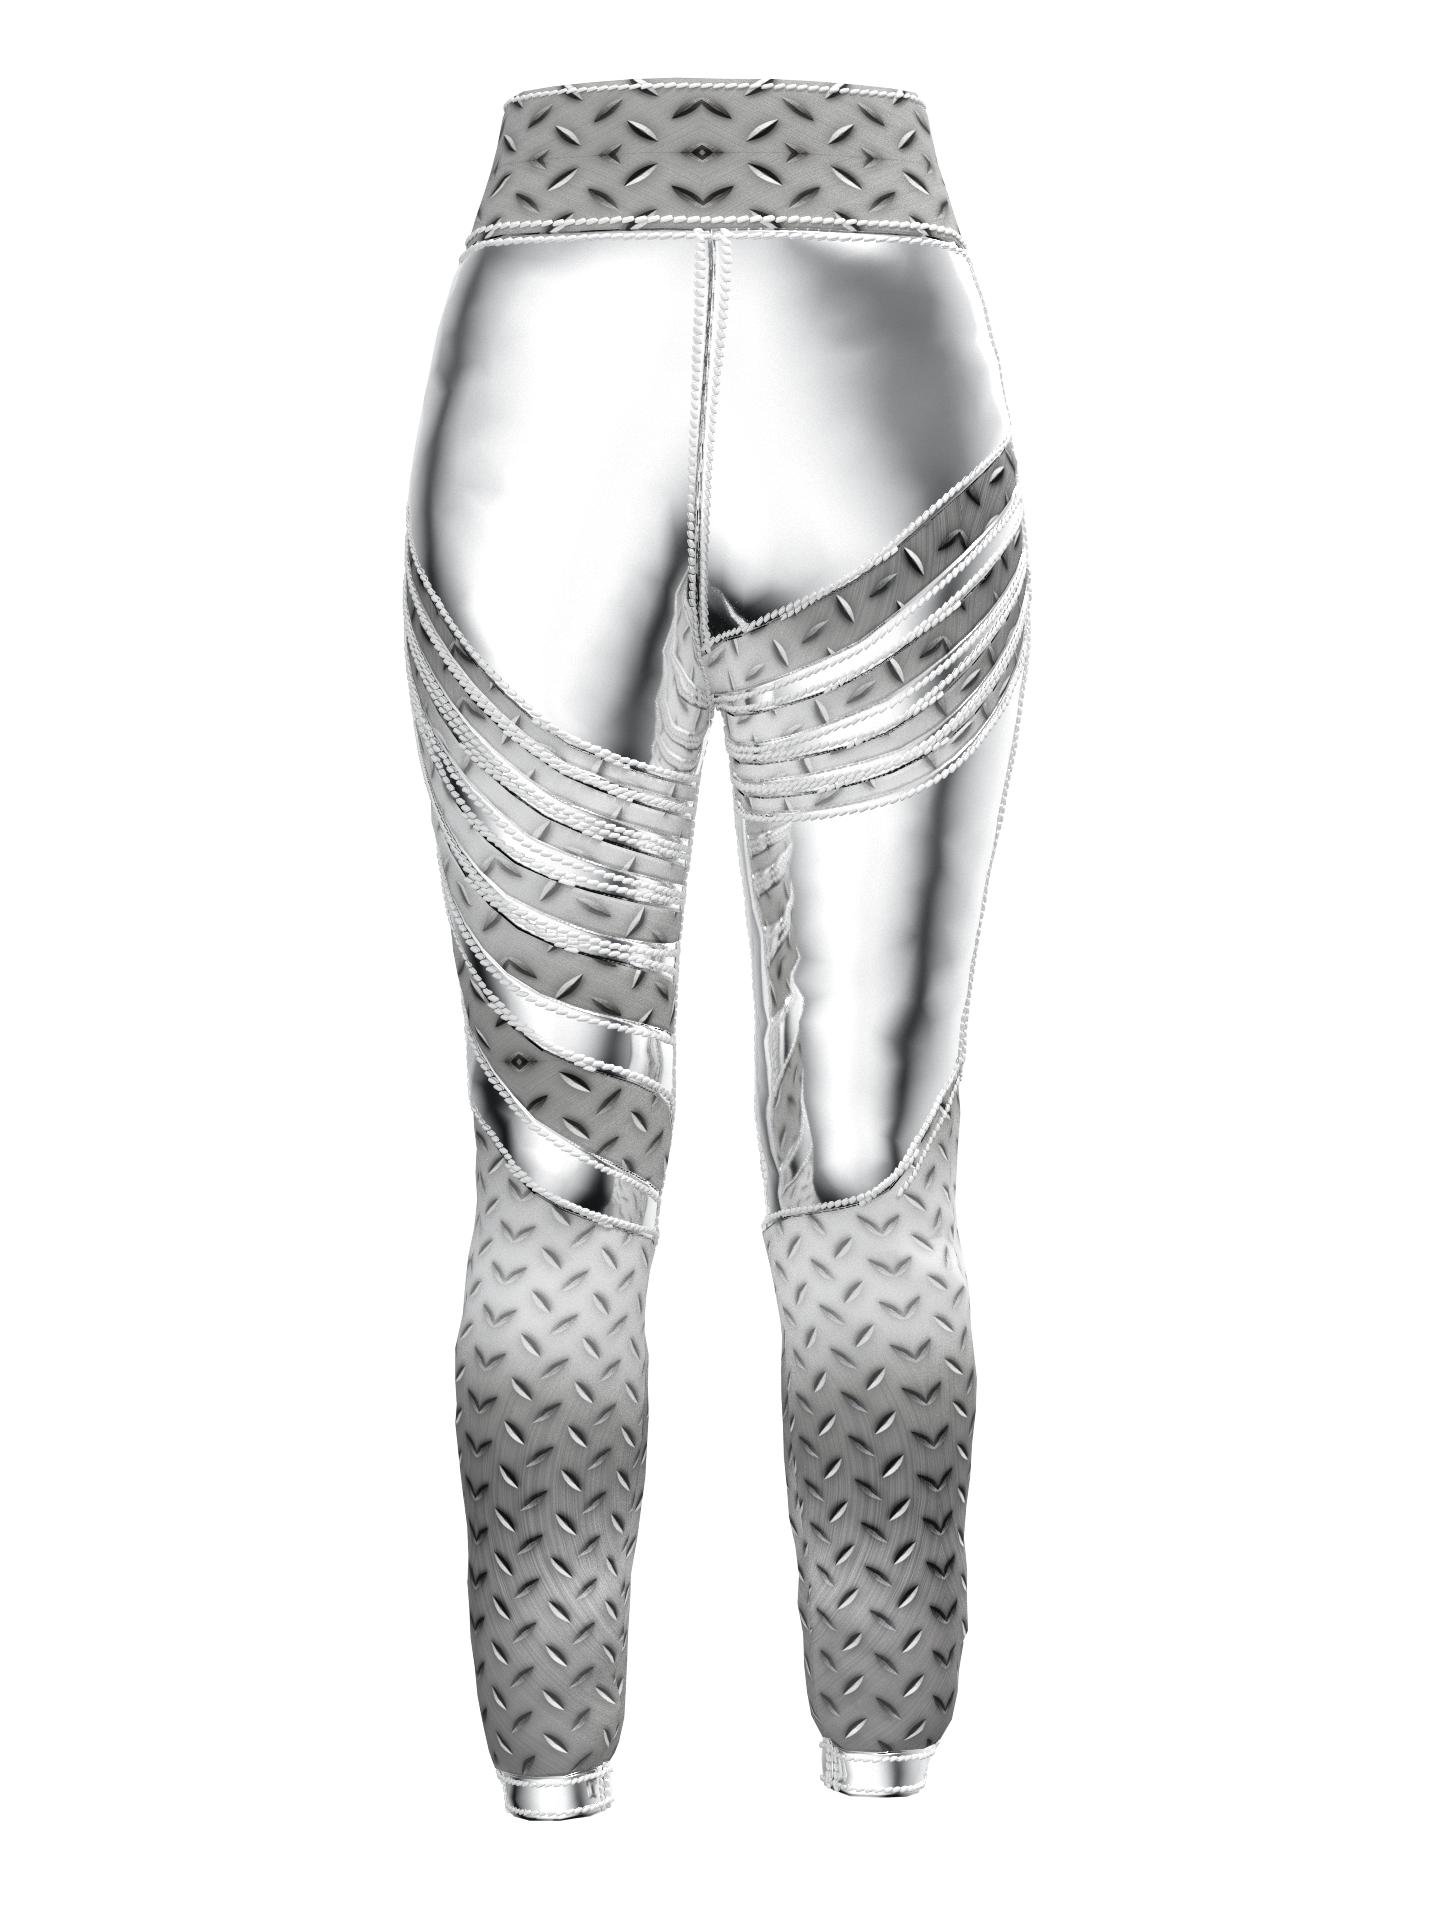 Moon Metal Pants by BERCE NAZ ATASEVER